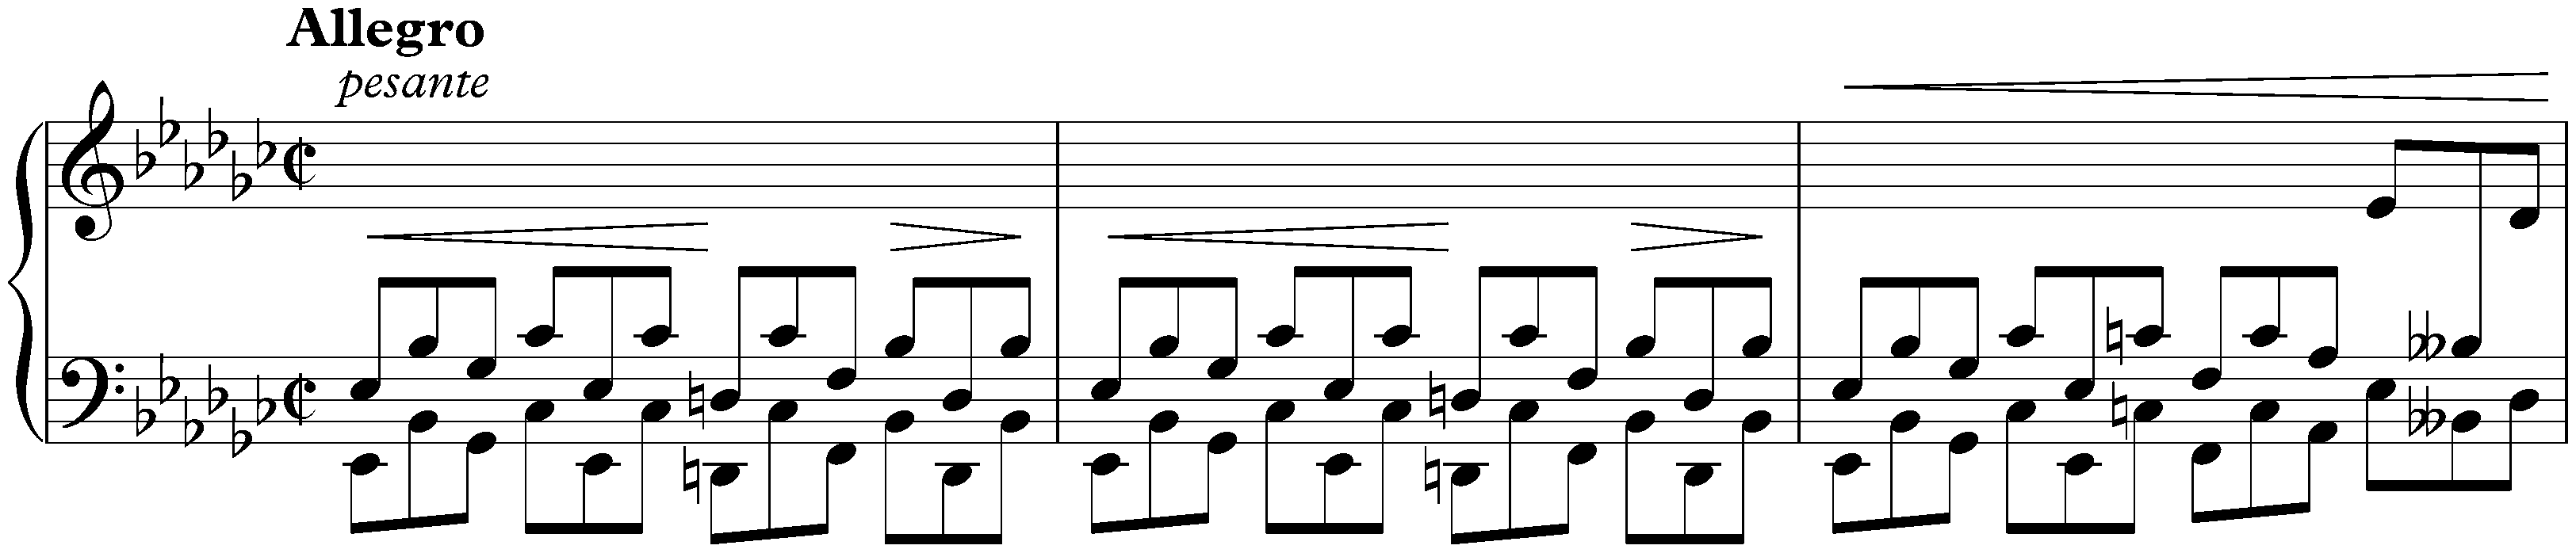 Twenty-four Préludes, op. 28; 14. E-flat minor